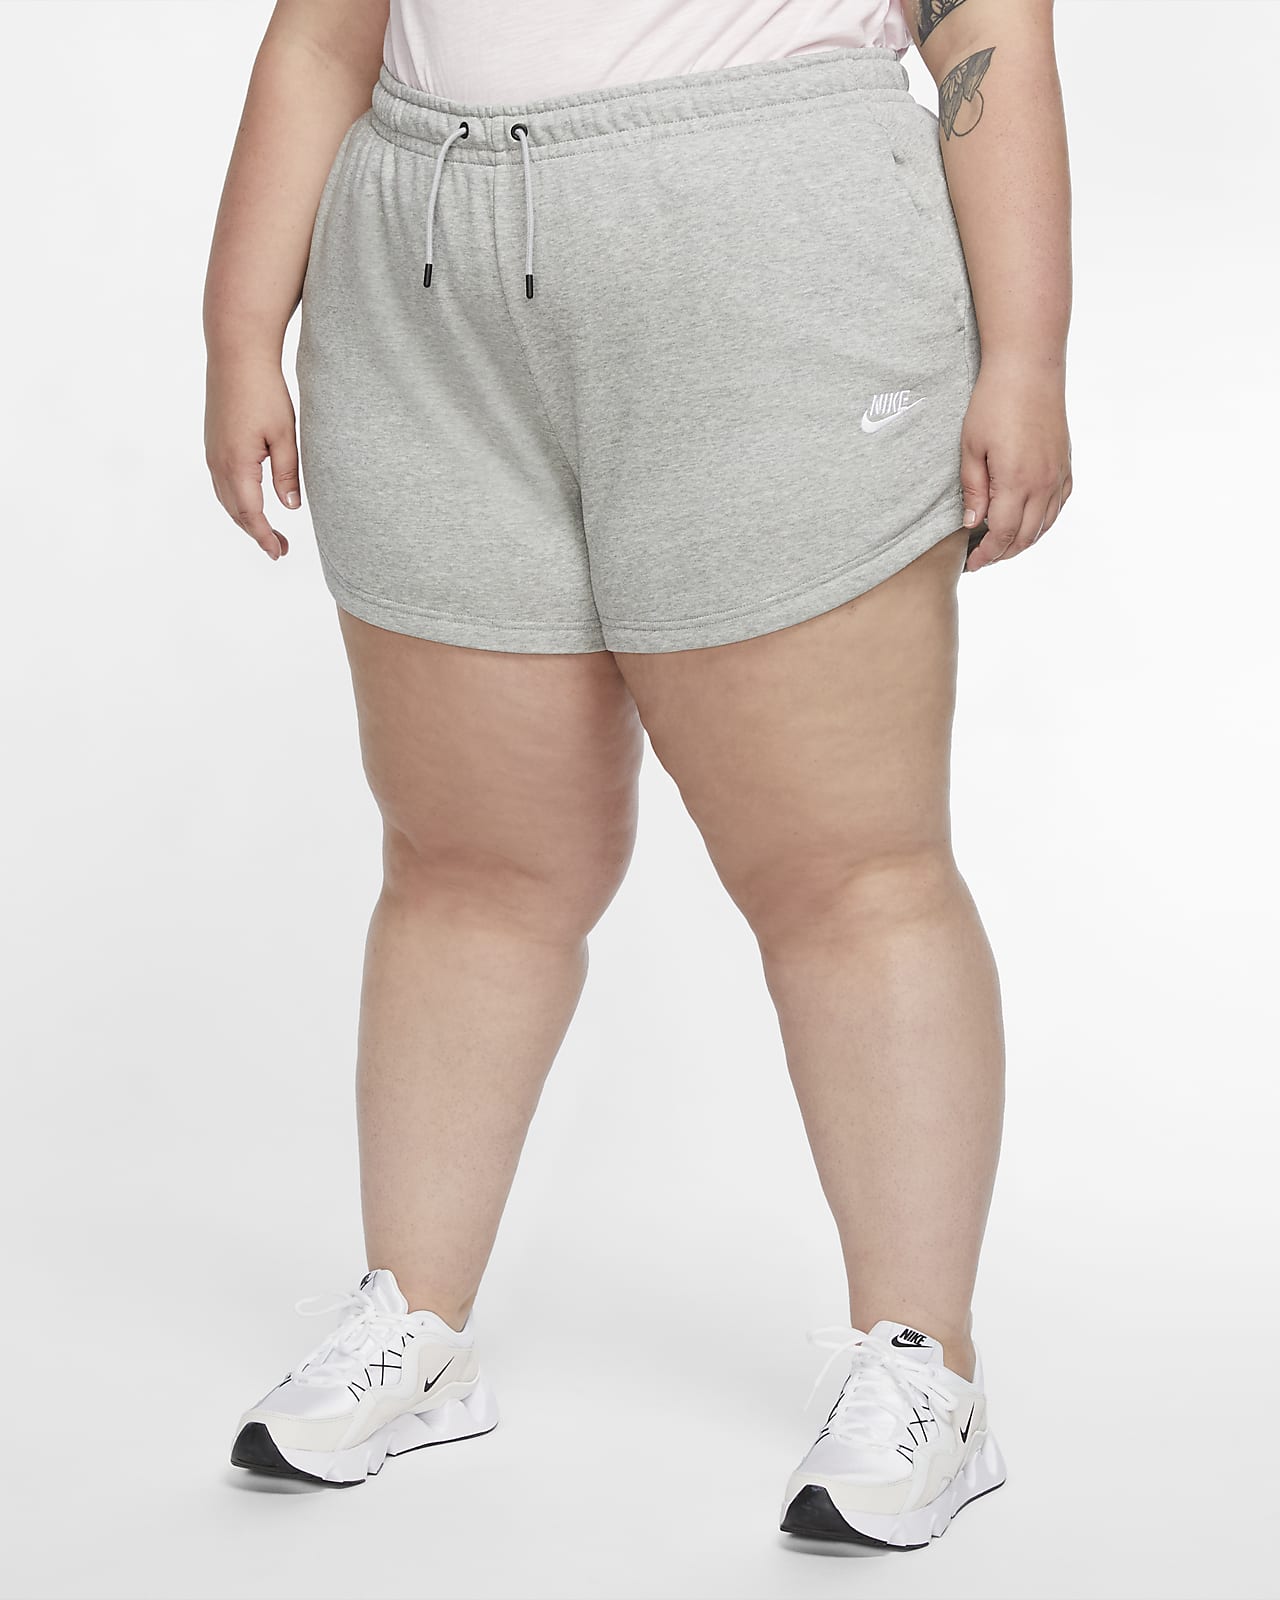 Til Ni På forhånd Brød Nike Sportswear-shorts til kvinder (Plus Size). Nike DK